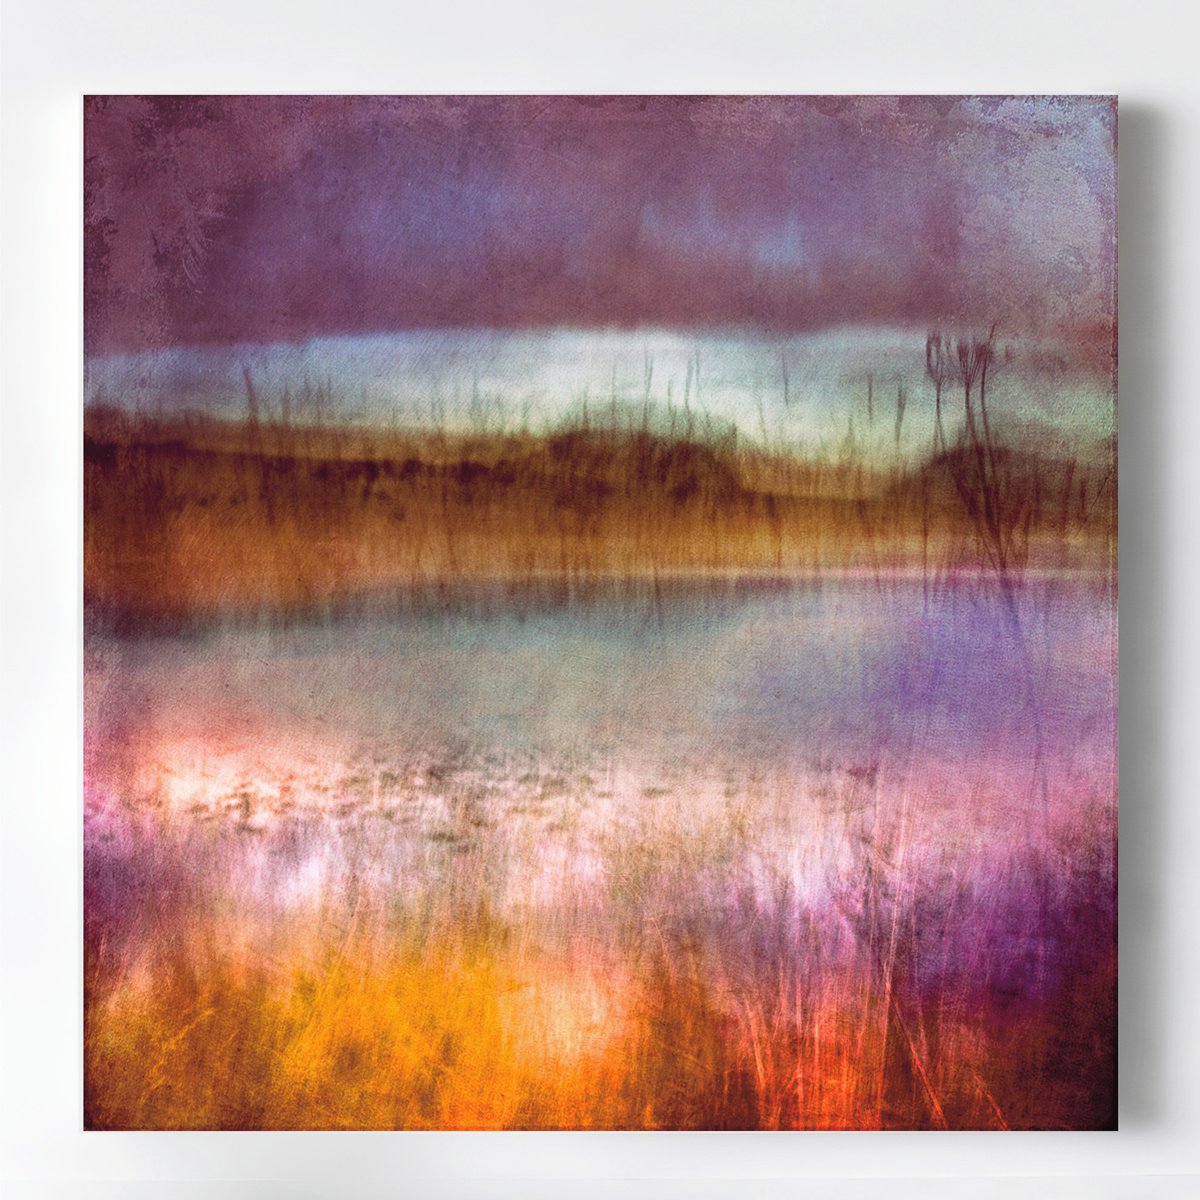 Misty Morning, Loch of Stenness by Lynne Douglas